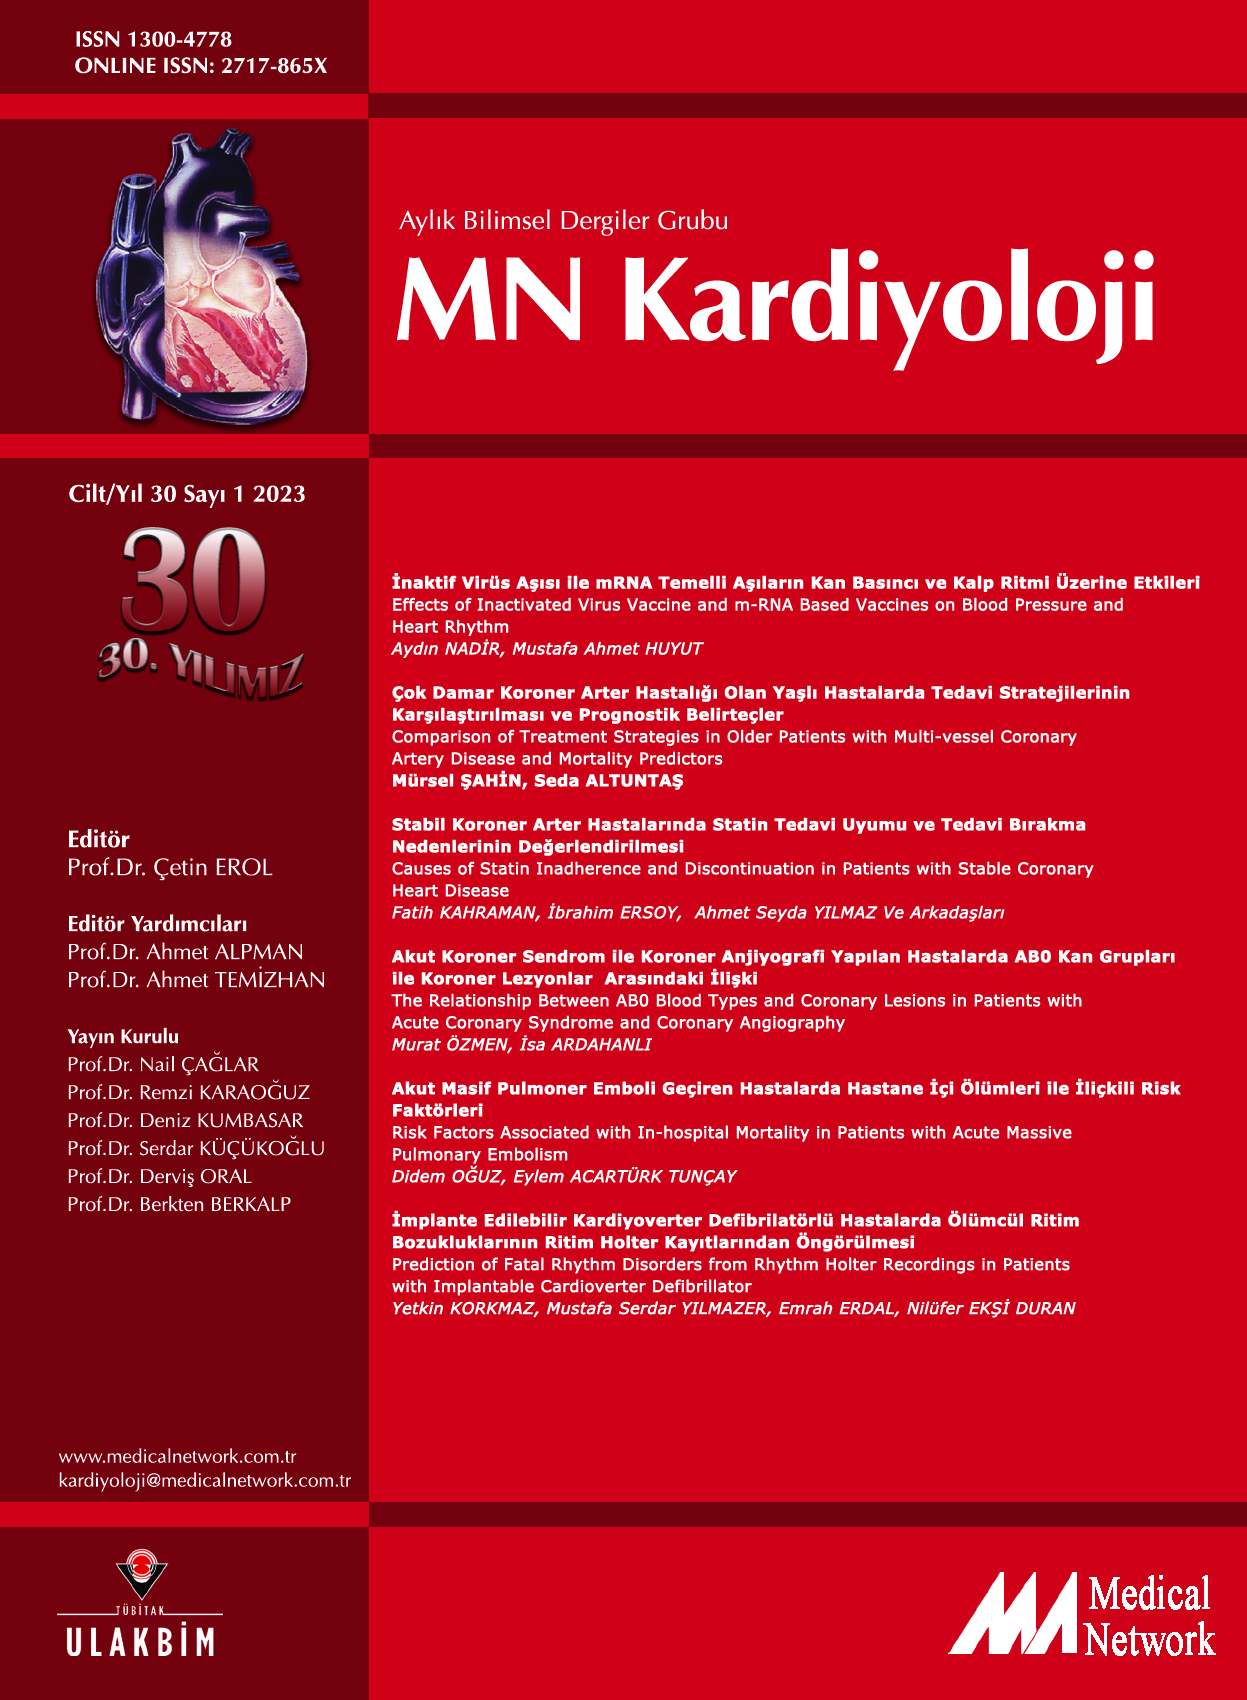 <p>MN Kardiyoloji Cilt: 30 Say: 1 2023 MN Cardiology Volume: 30 No: 1 2023</p>